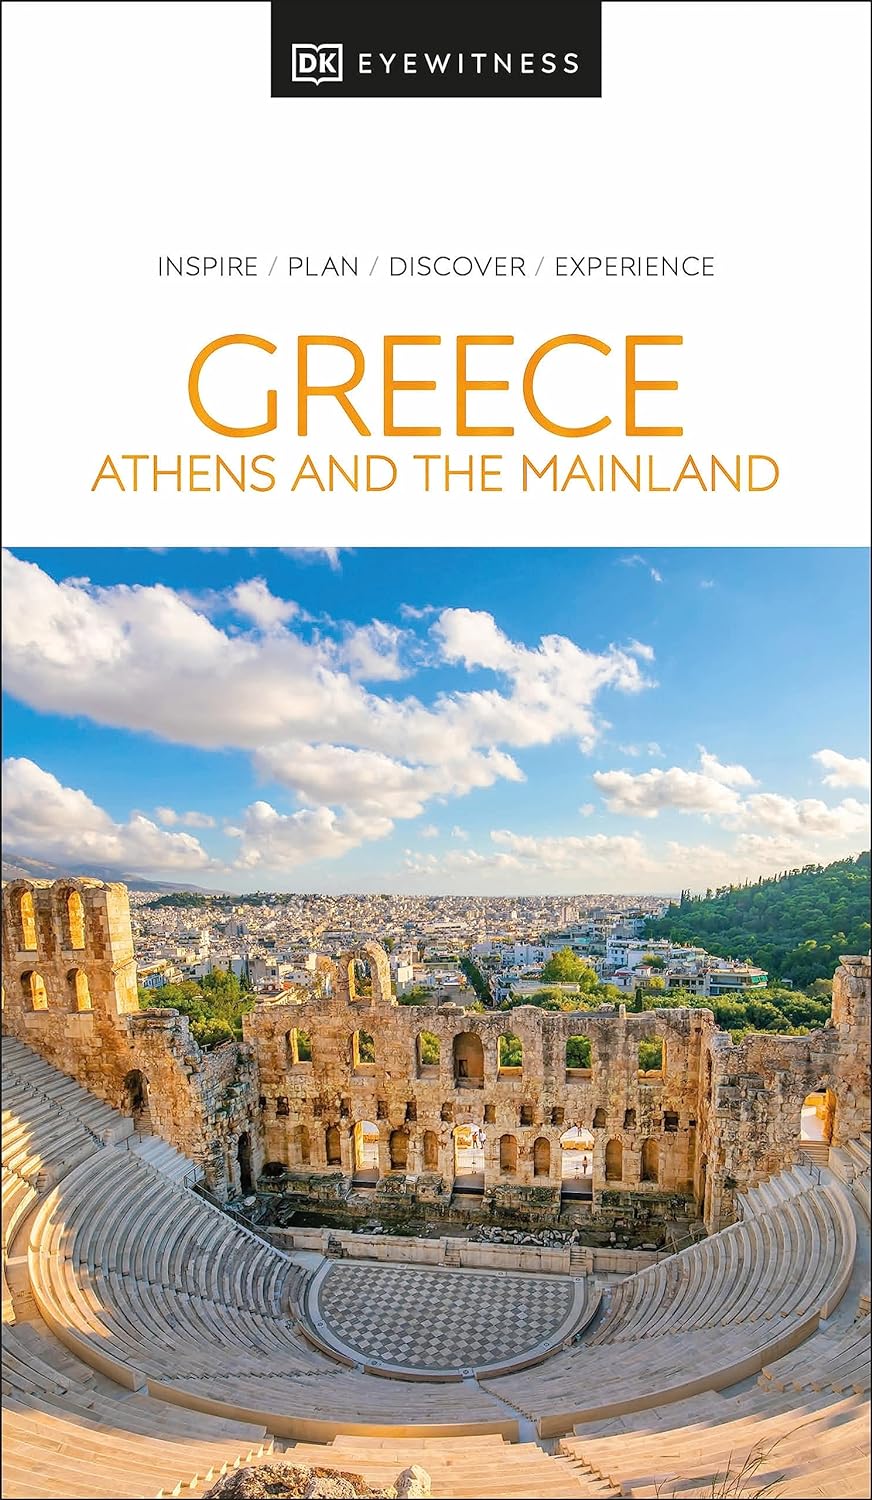 Eyewitness Greece, Athens & the Mainland